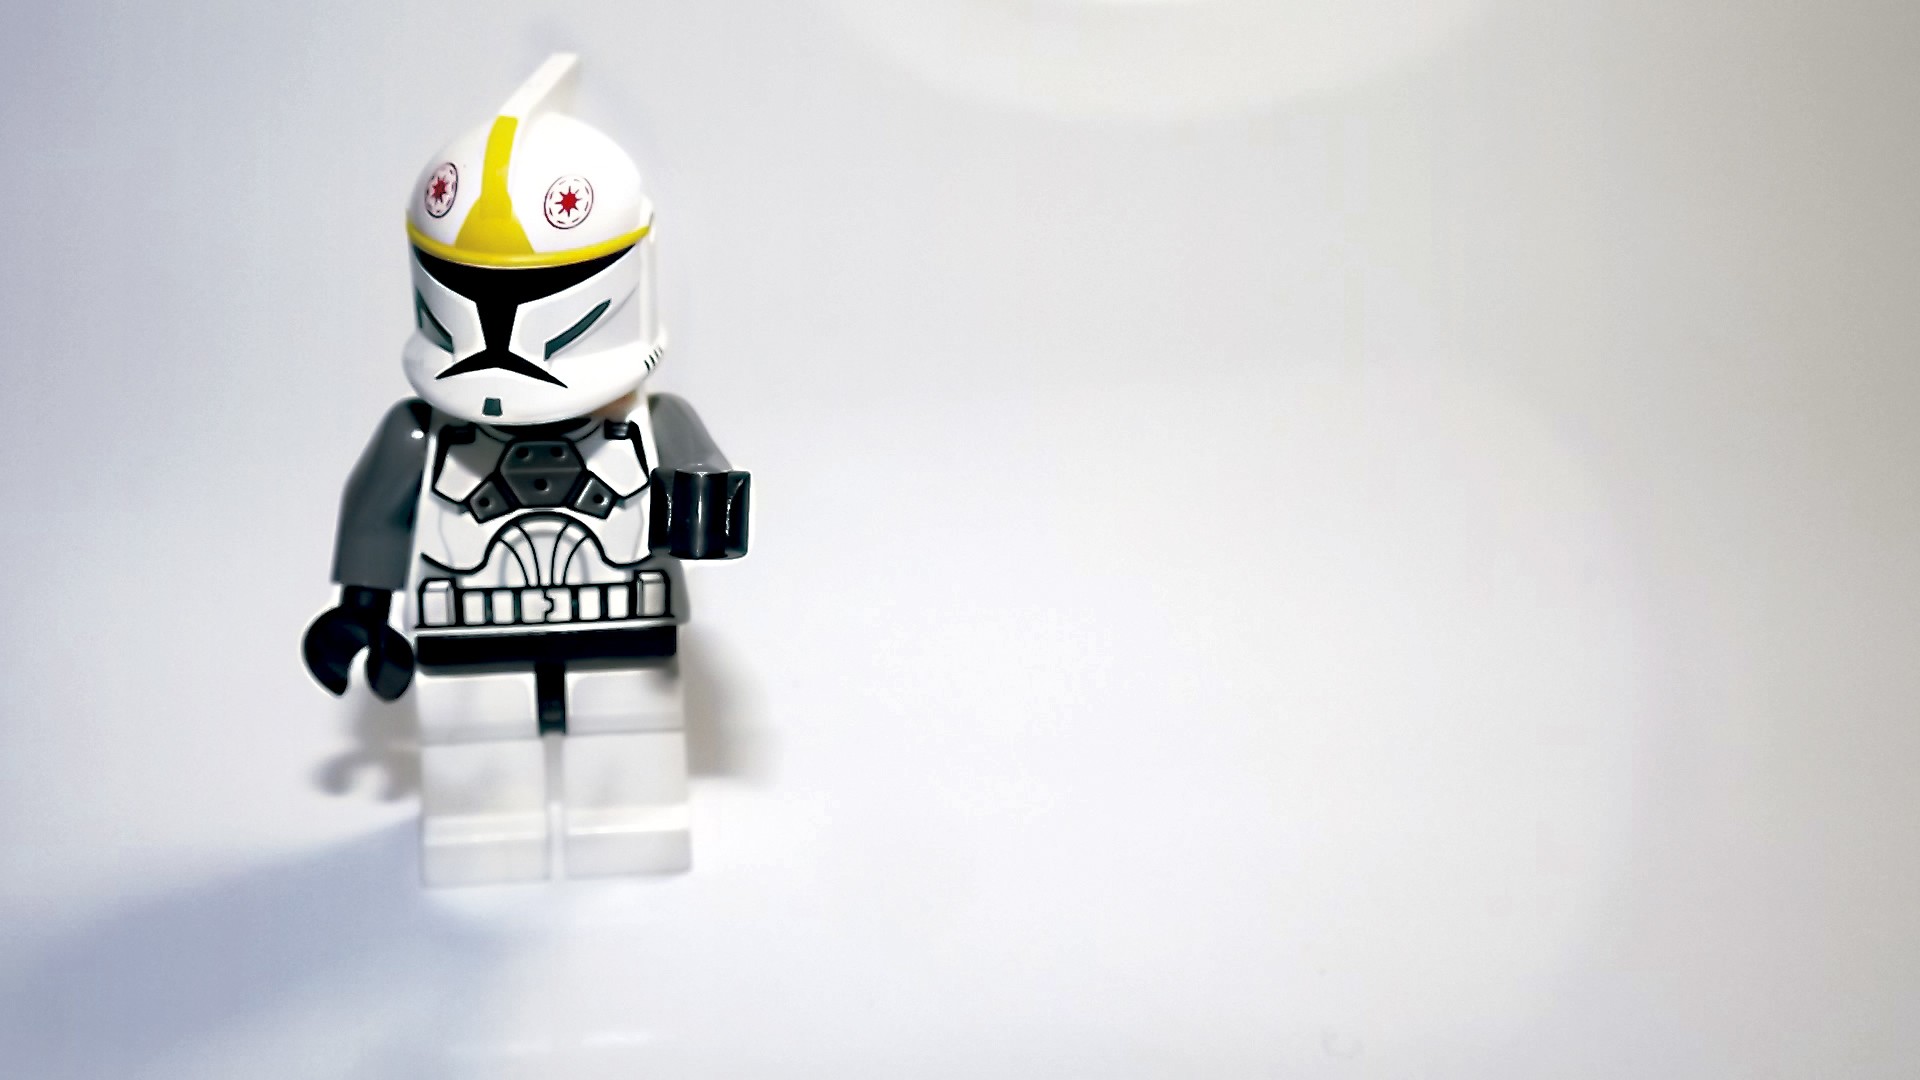 Star Wars LEGO Star Wars Simple Background Toys Macro Clone Trooper Pilot LEGO White Background 1920x1080